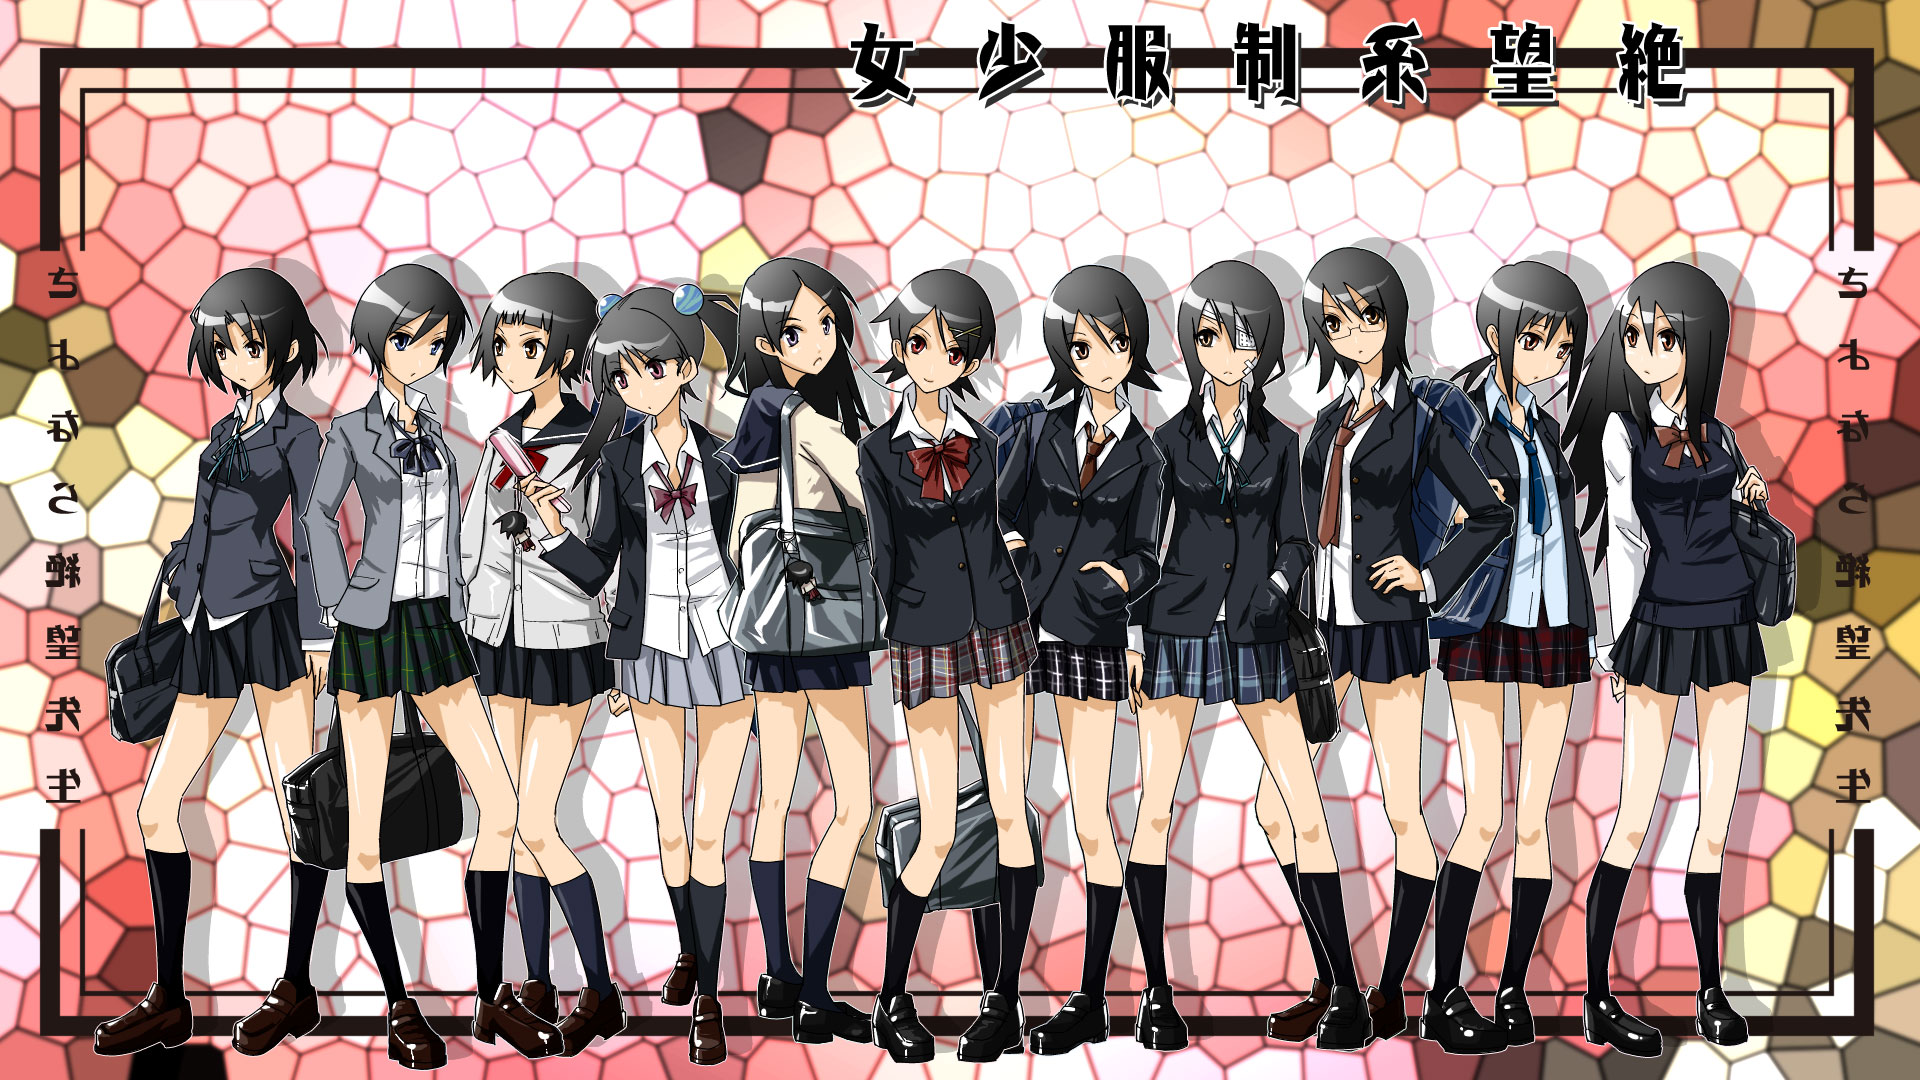 Sfondi del desktop Sayonara Zetsubou Sensei Anime Ragazze 1920x1080 ragazza giovane donna giovani donne